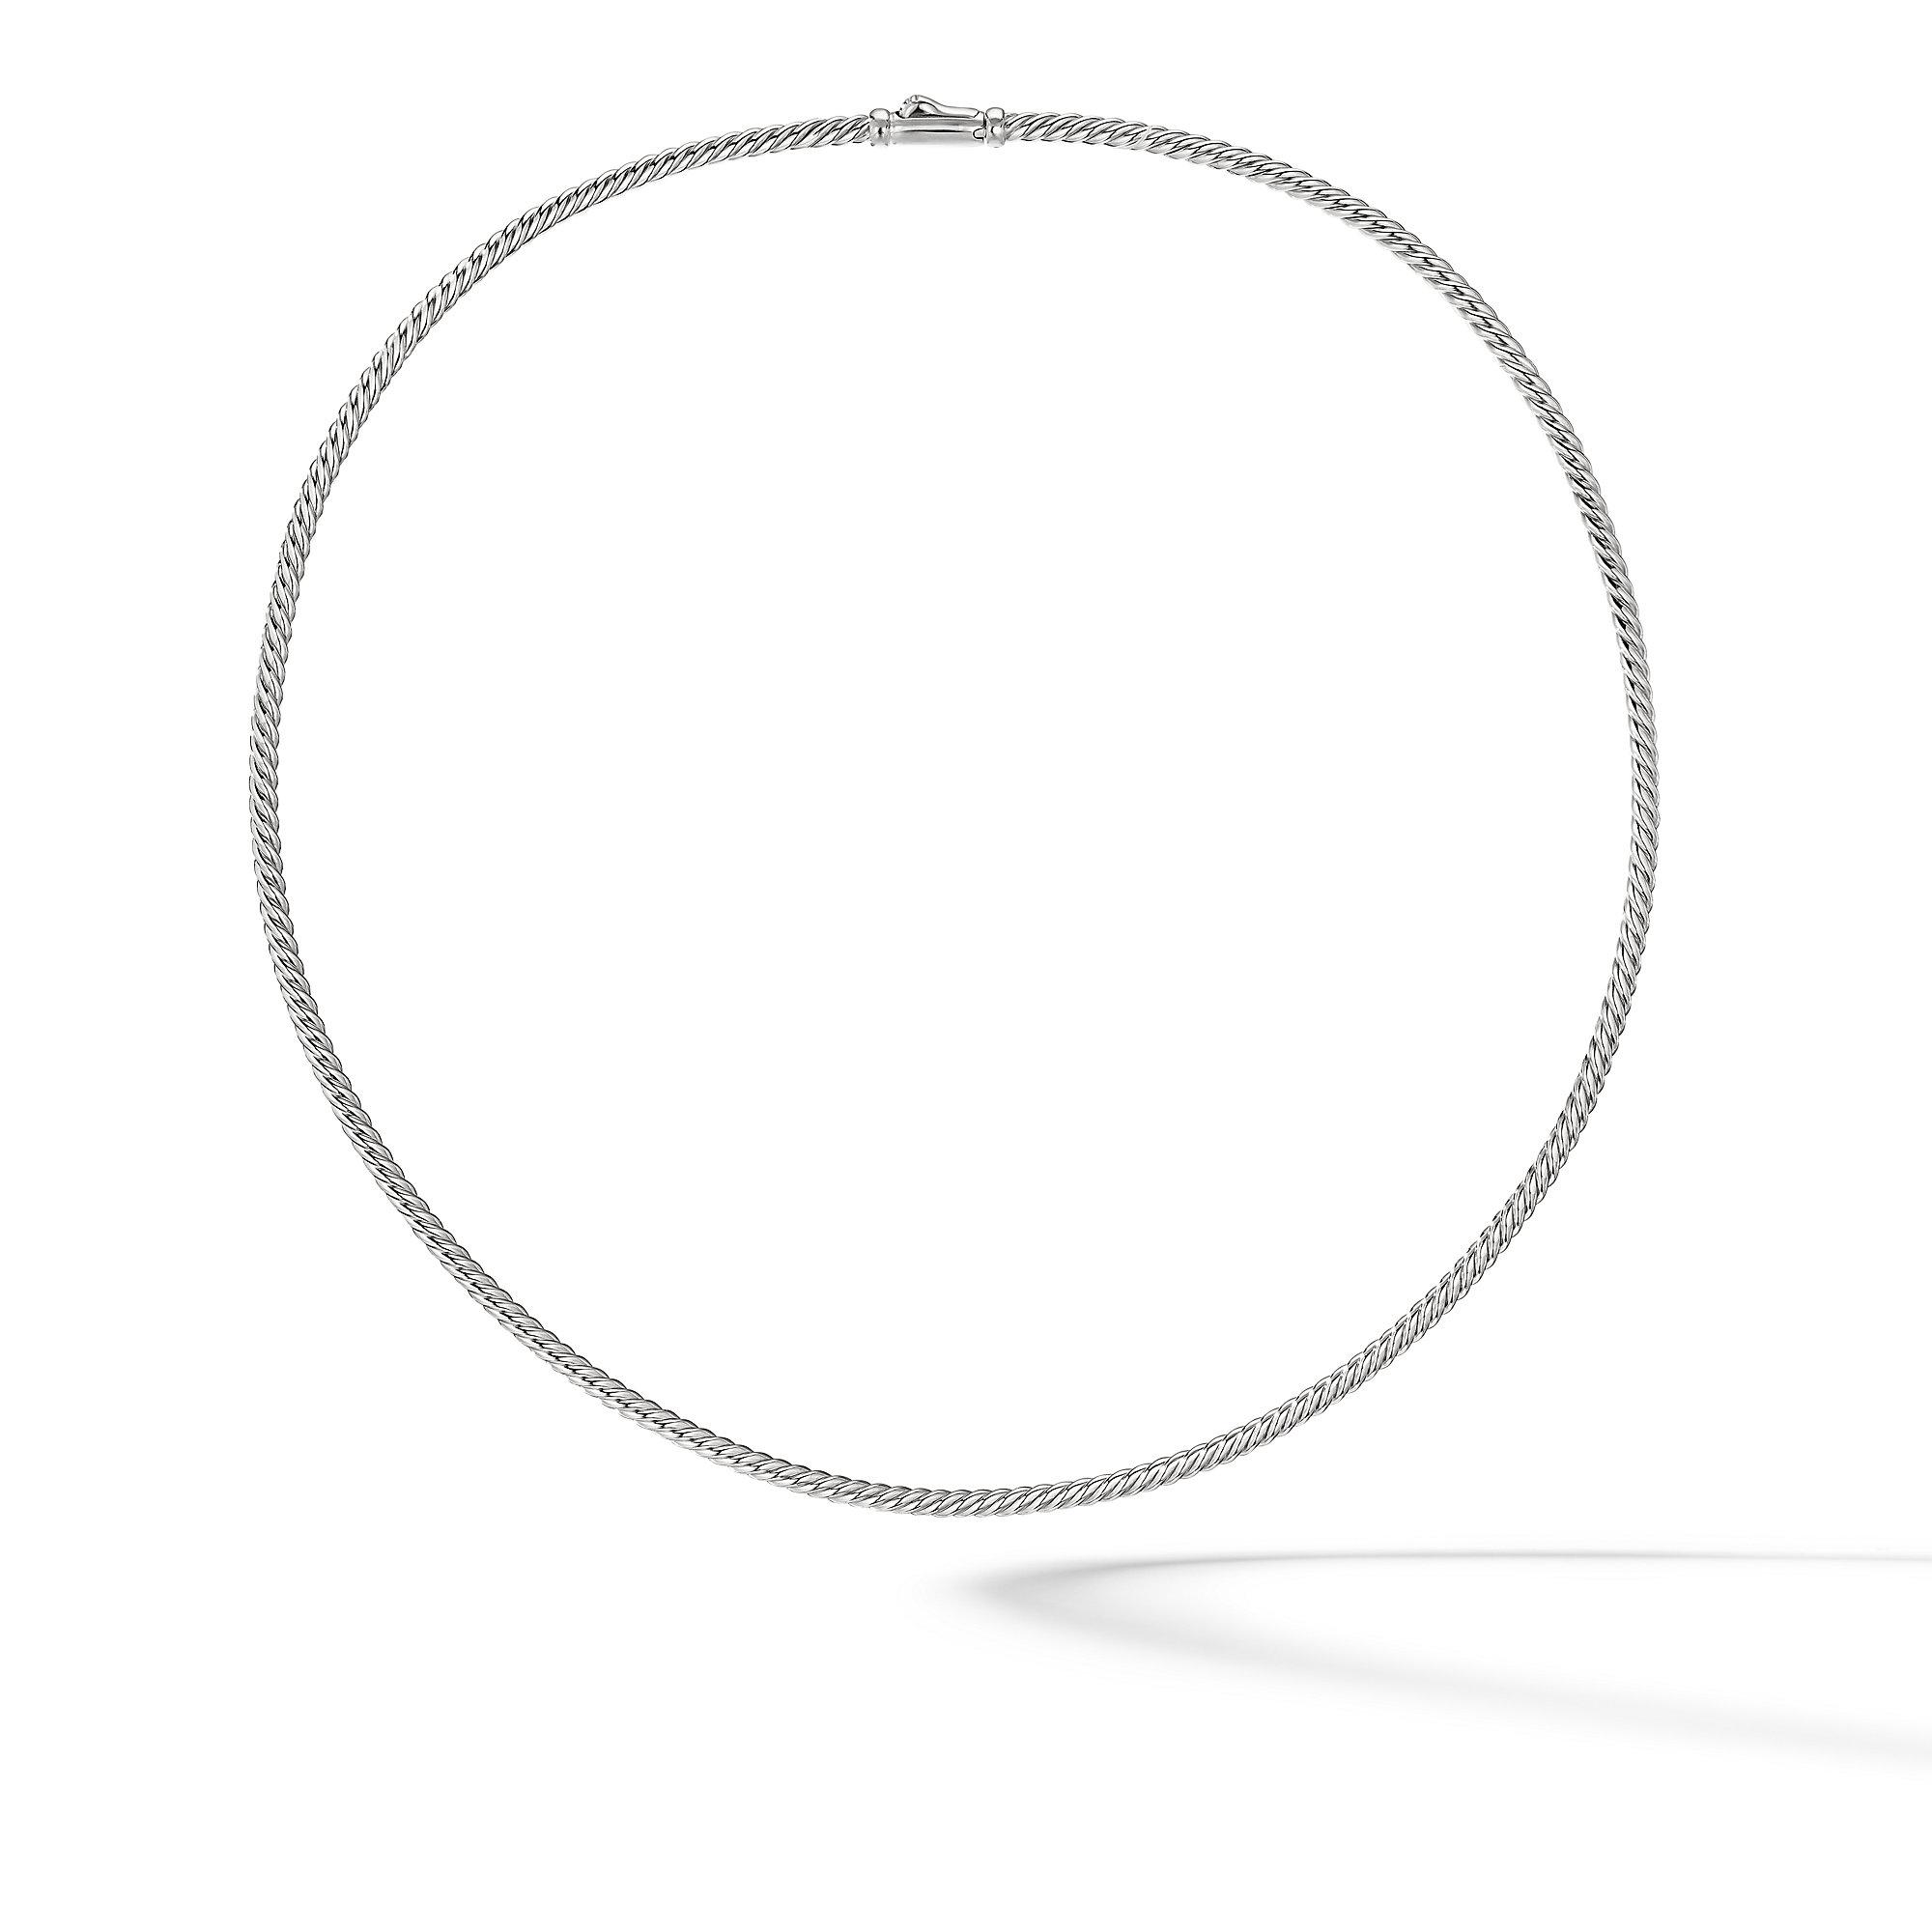 David Yurman Sculpted Cable Necklace, size Medium 0